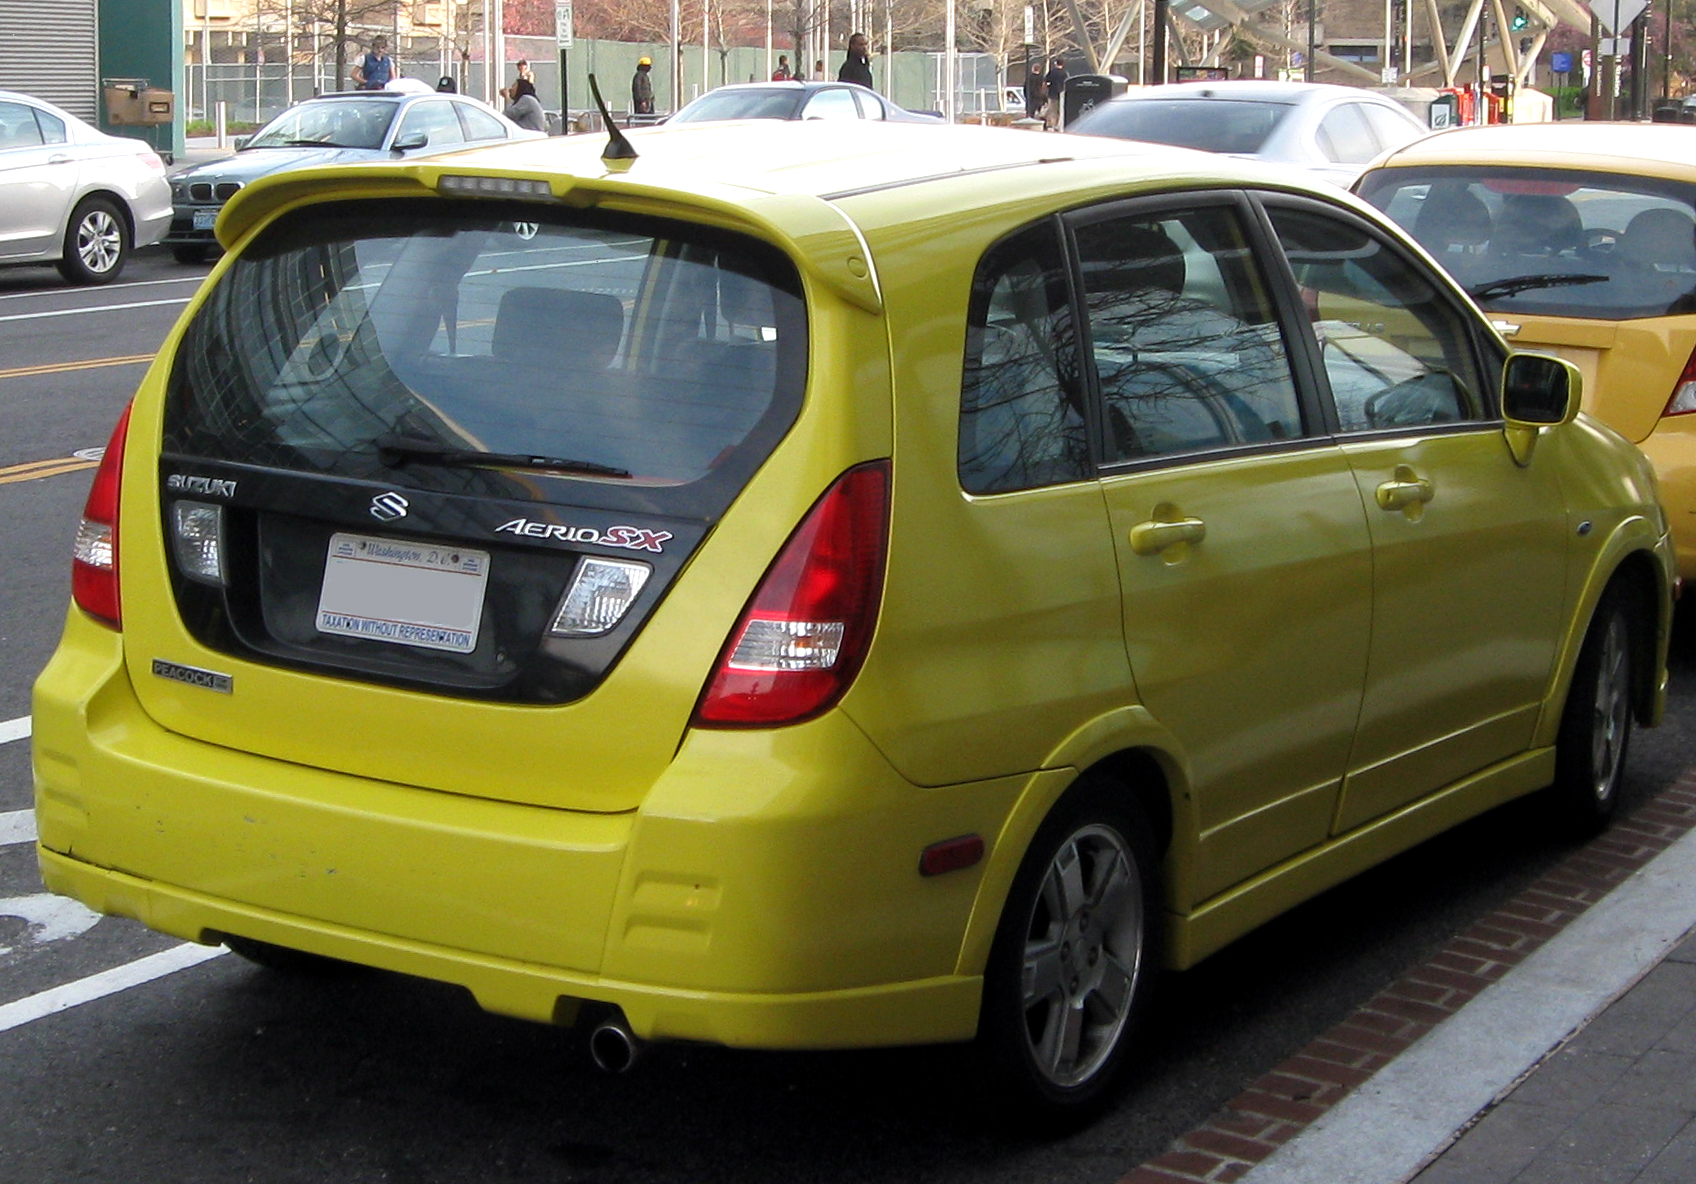 File:Suzuki Aerio SX -- 04-10-2011 rear.jpg - Wikimedia Commons